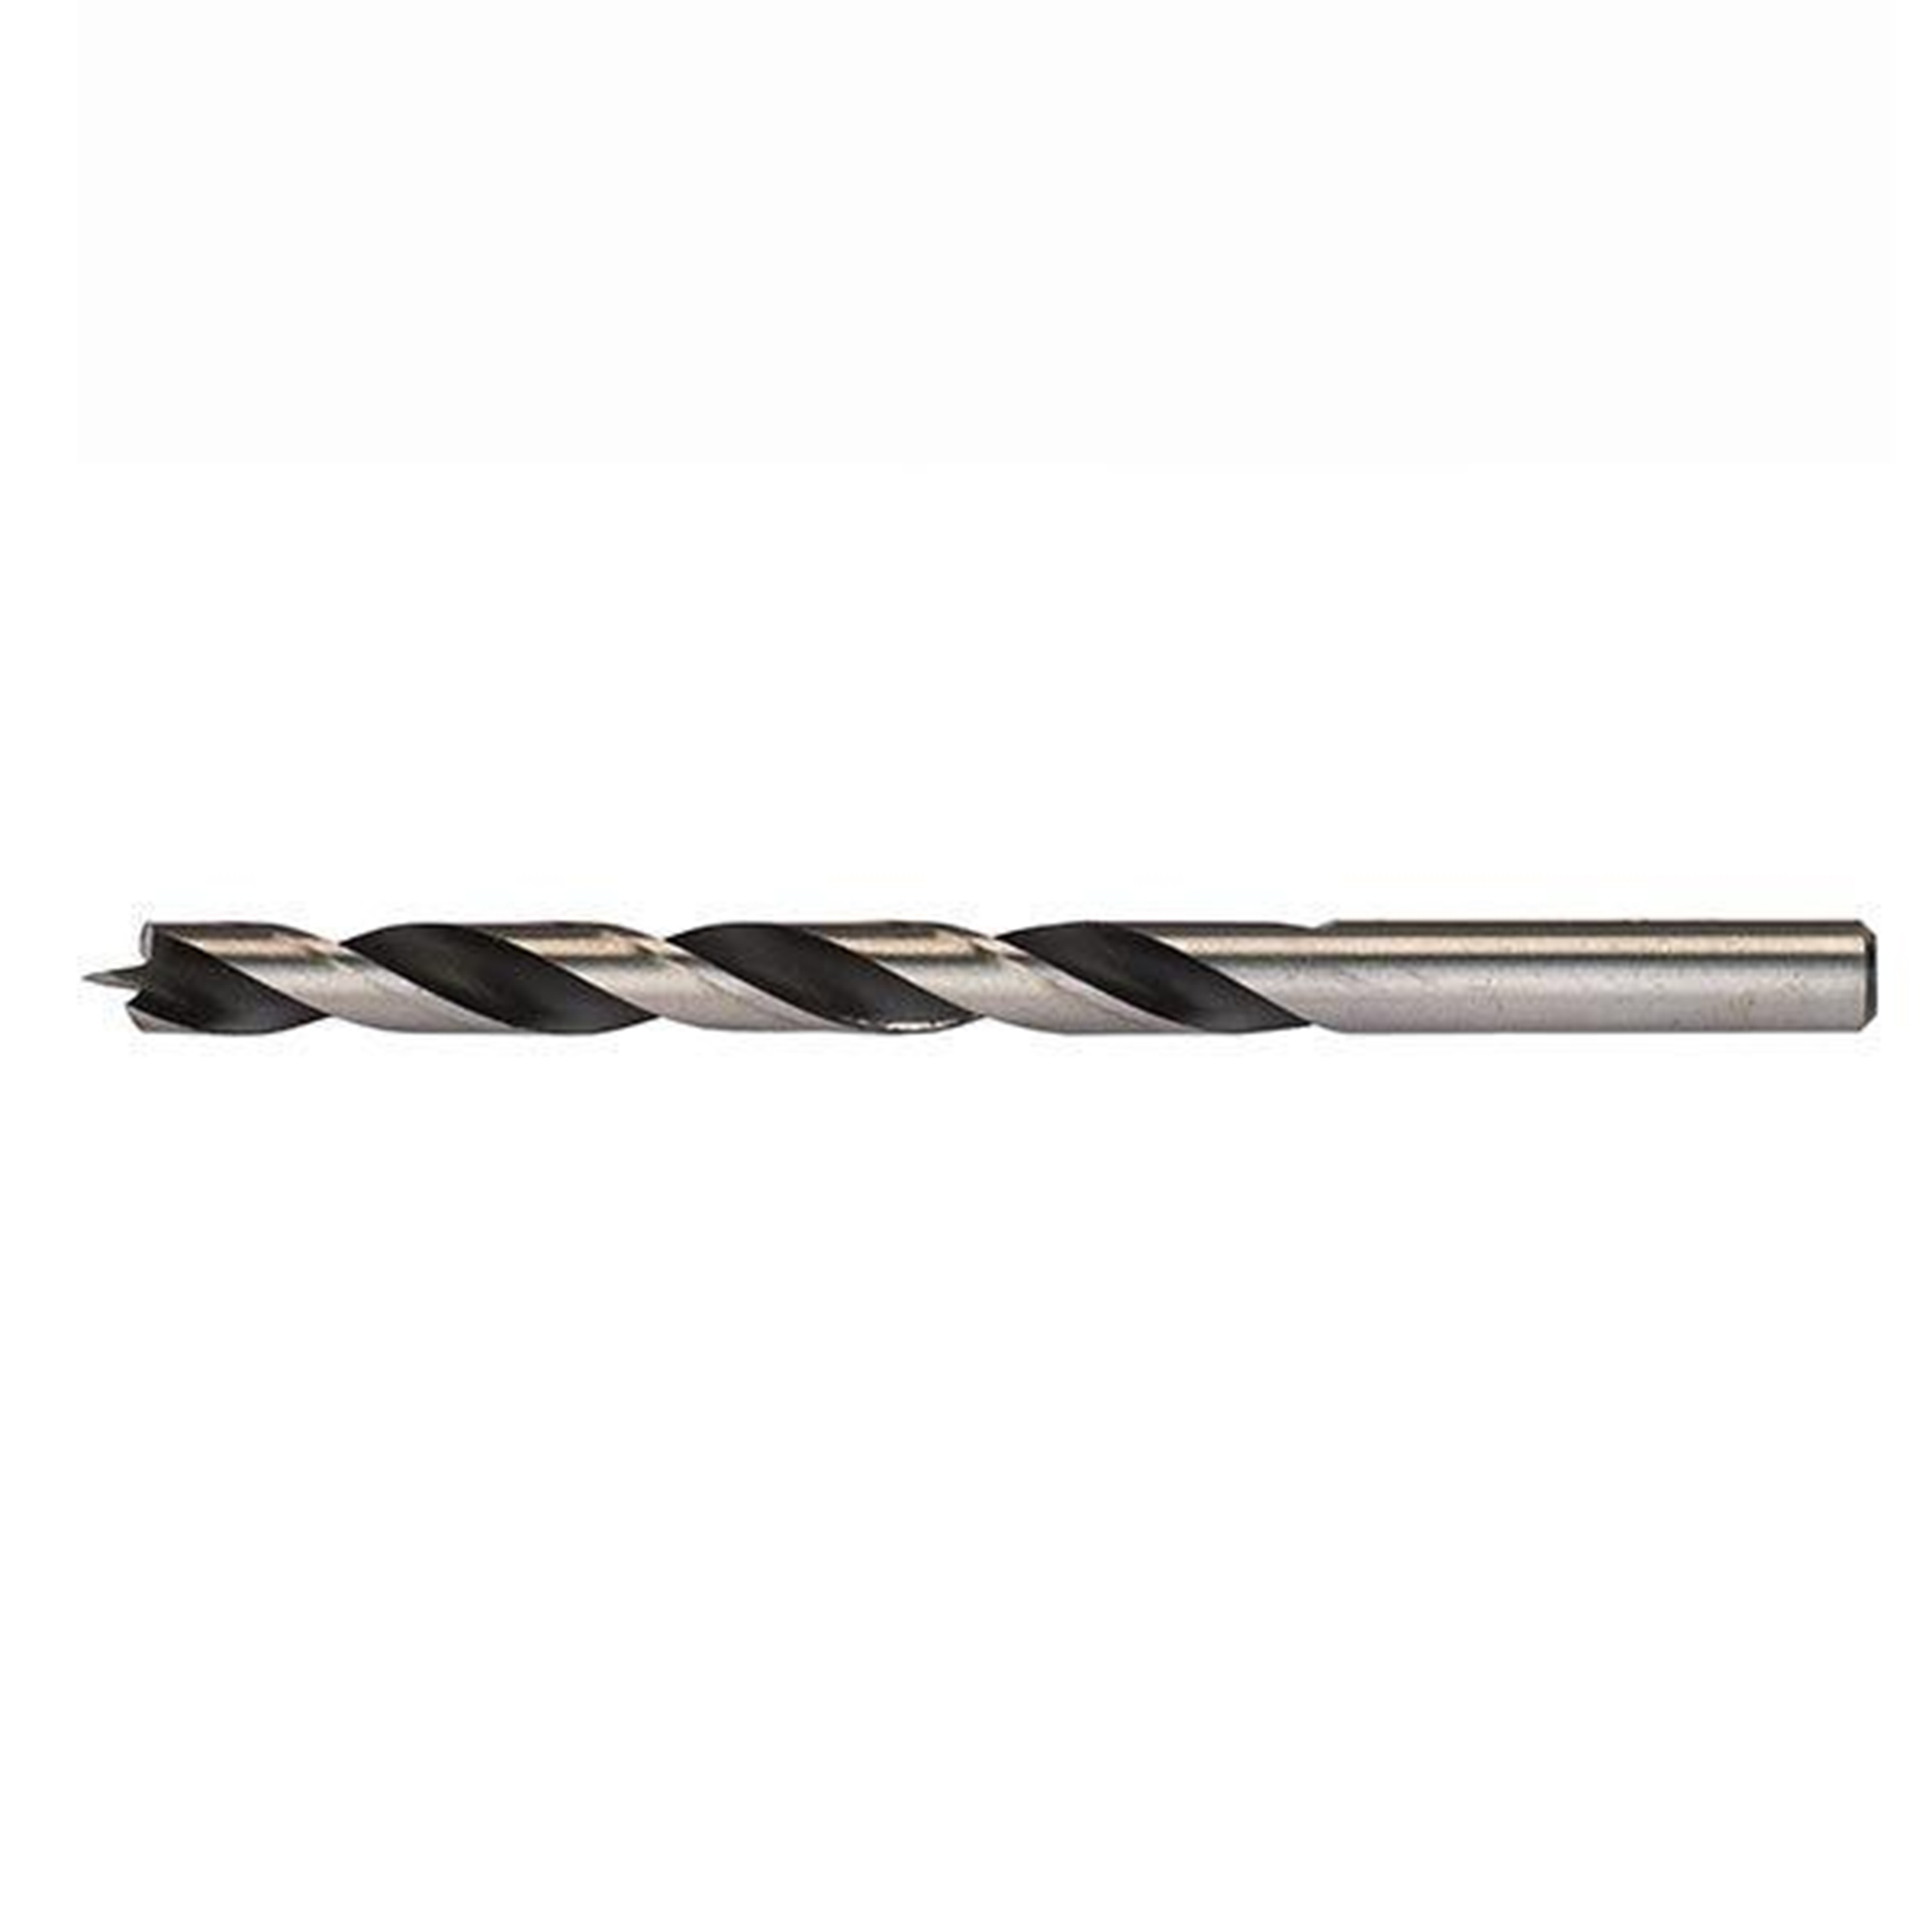 11/32-inch Chrome-vanadium Steel Brad Point Drill Bit